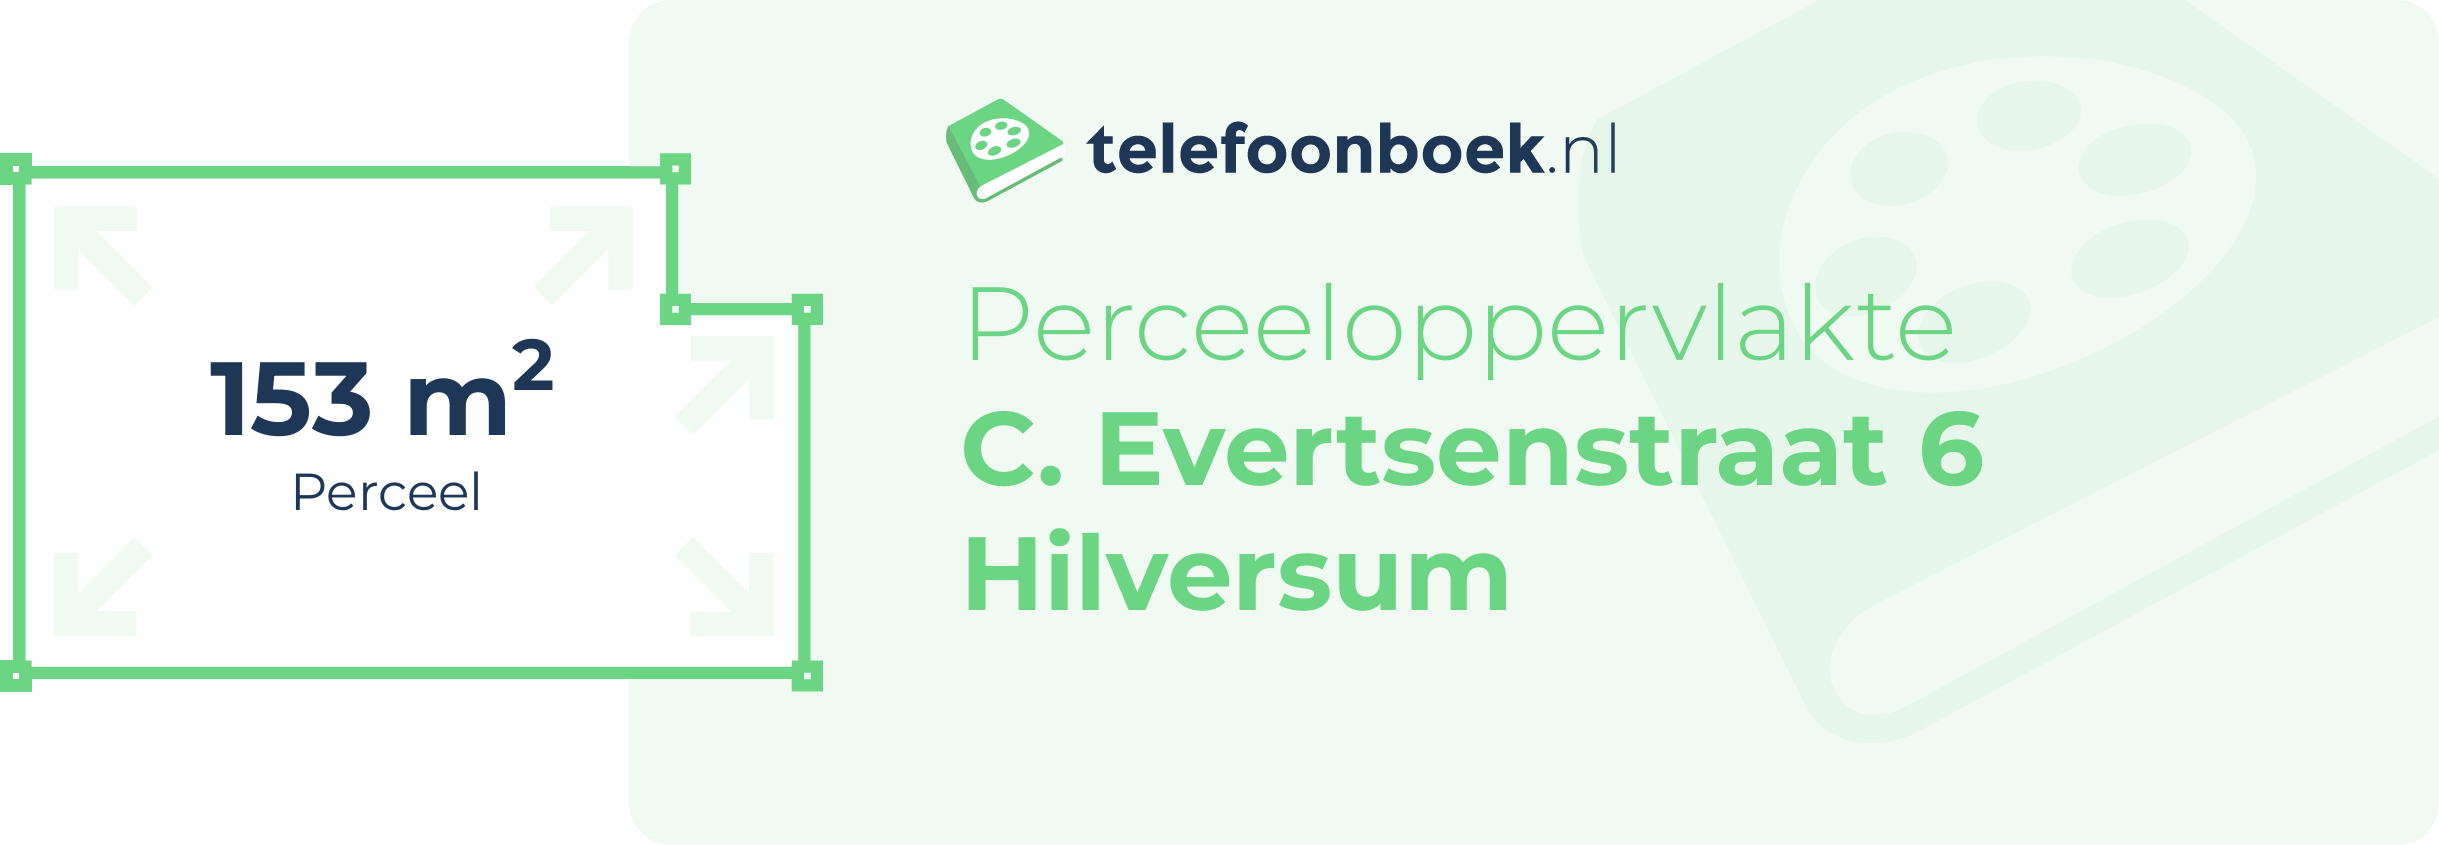 Perceeloppervlakte C. Evertsenstraat 6 Hilversum